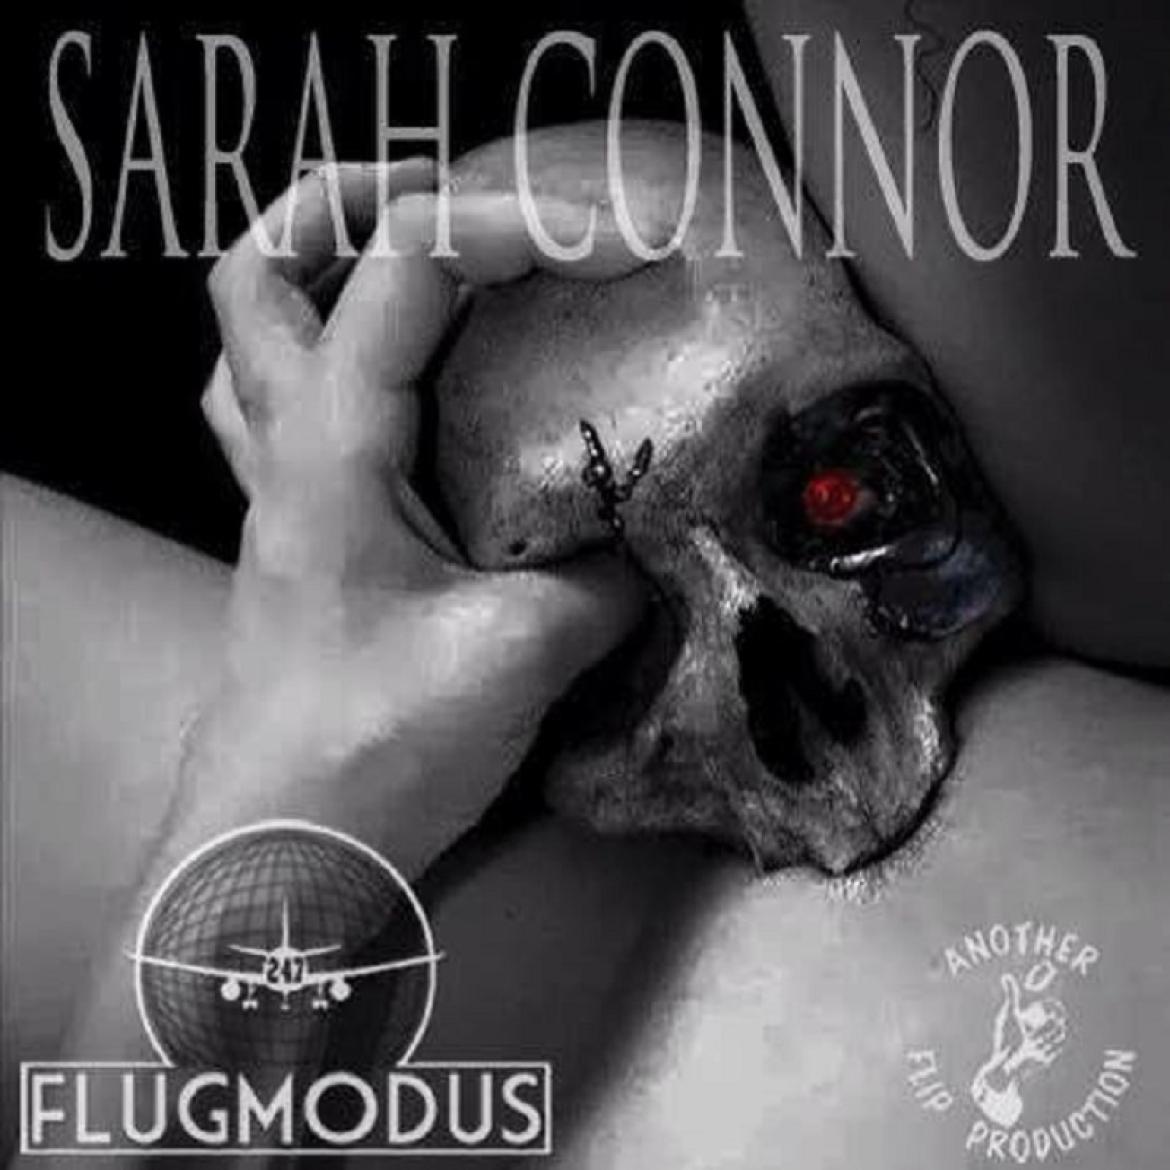 FLUGMODUS247 - SARAH CONNER (Official Music Video)